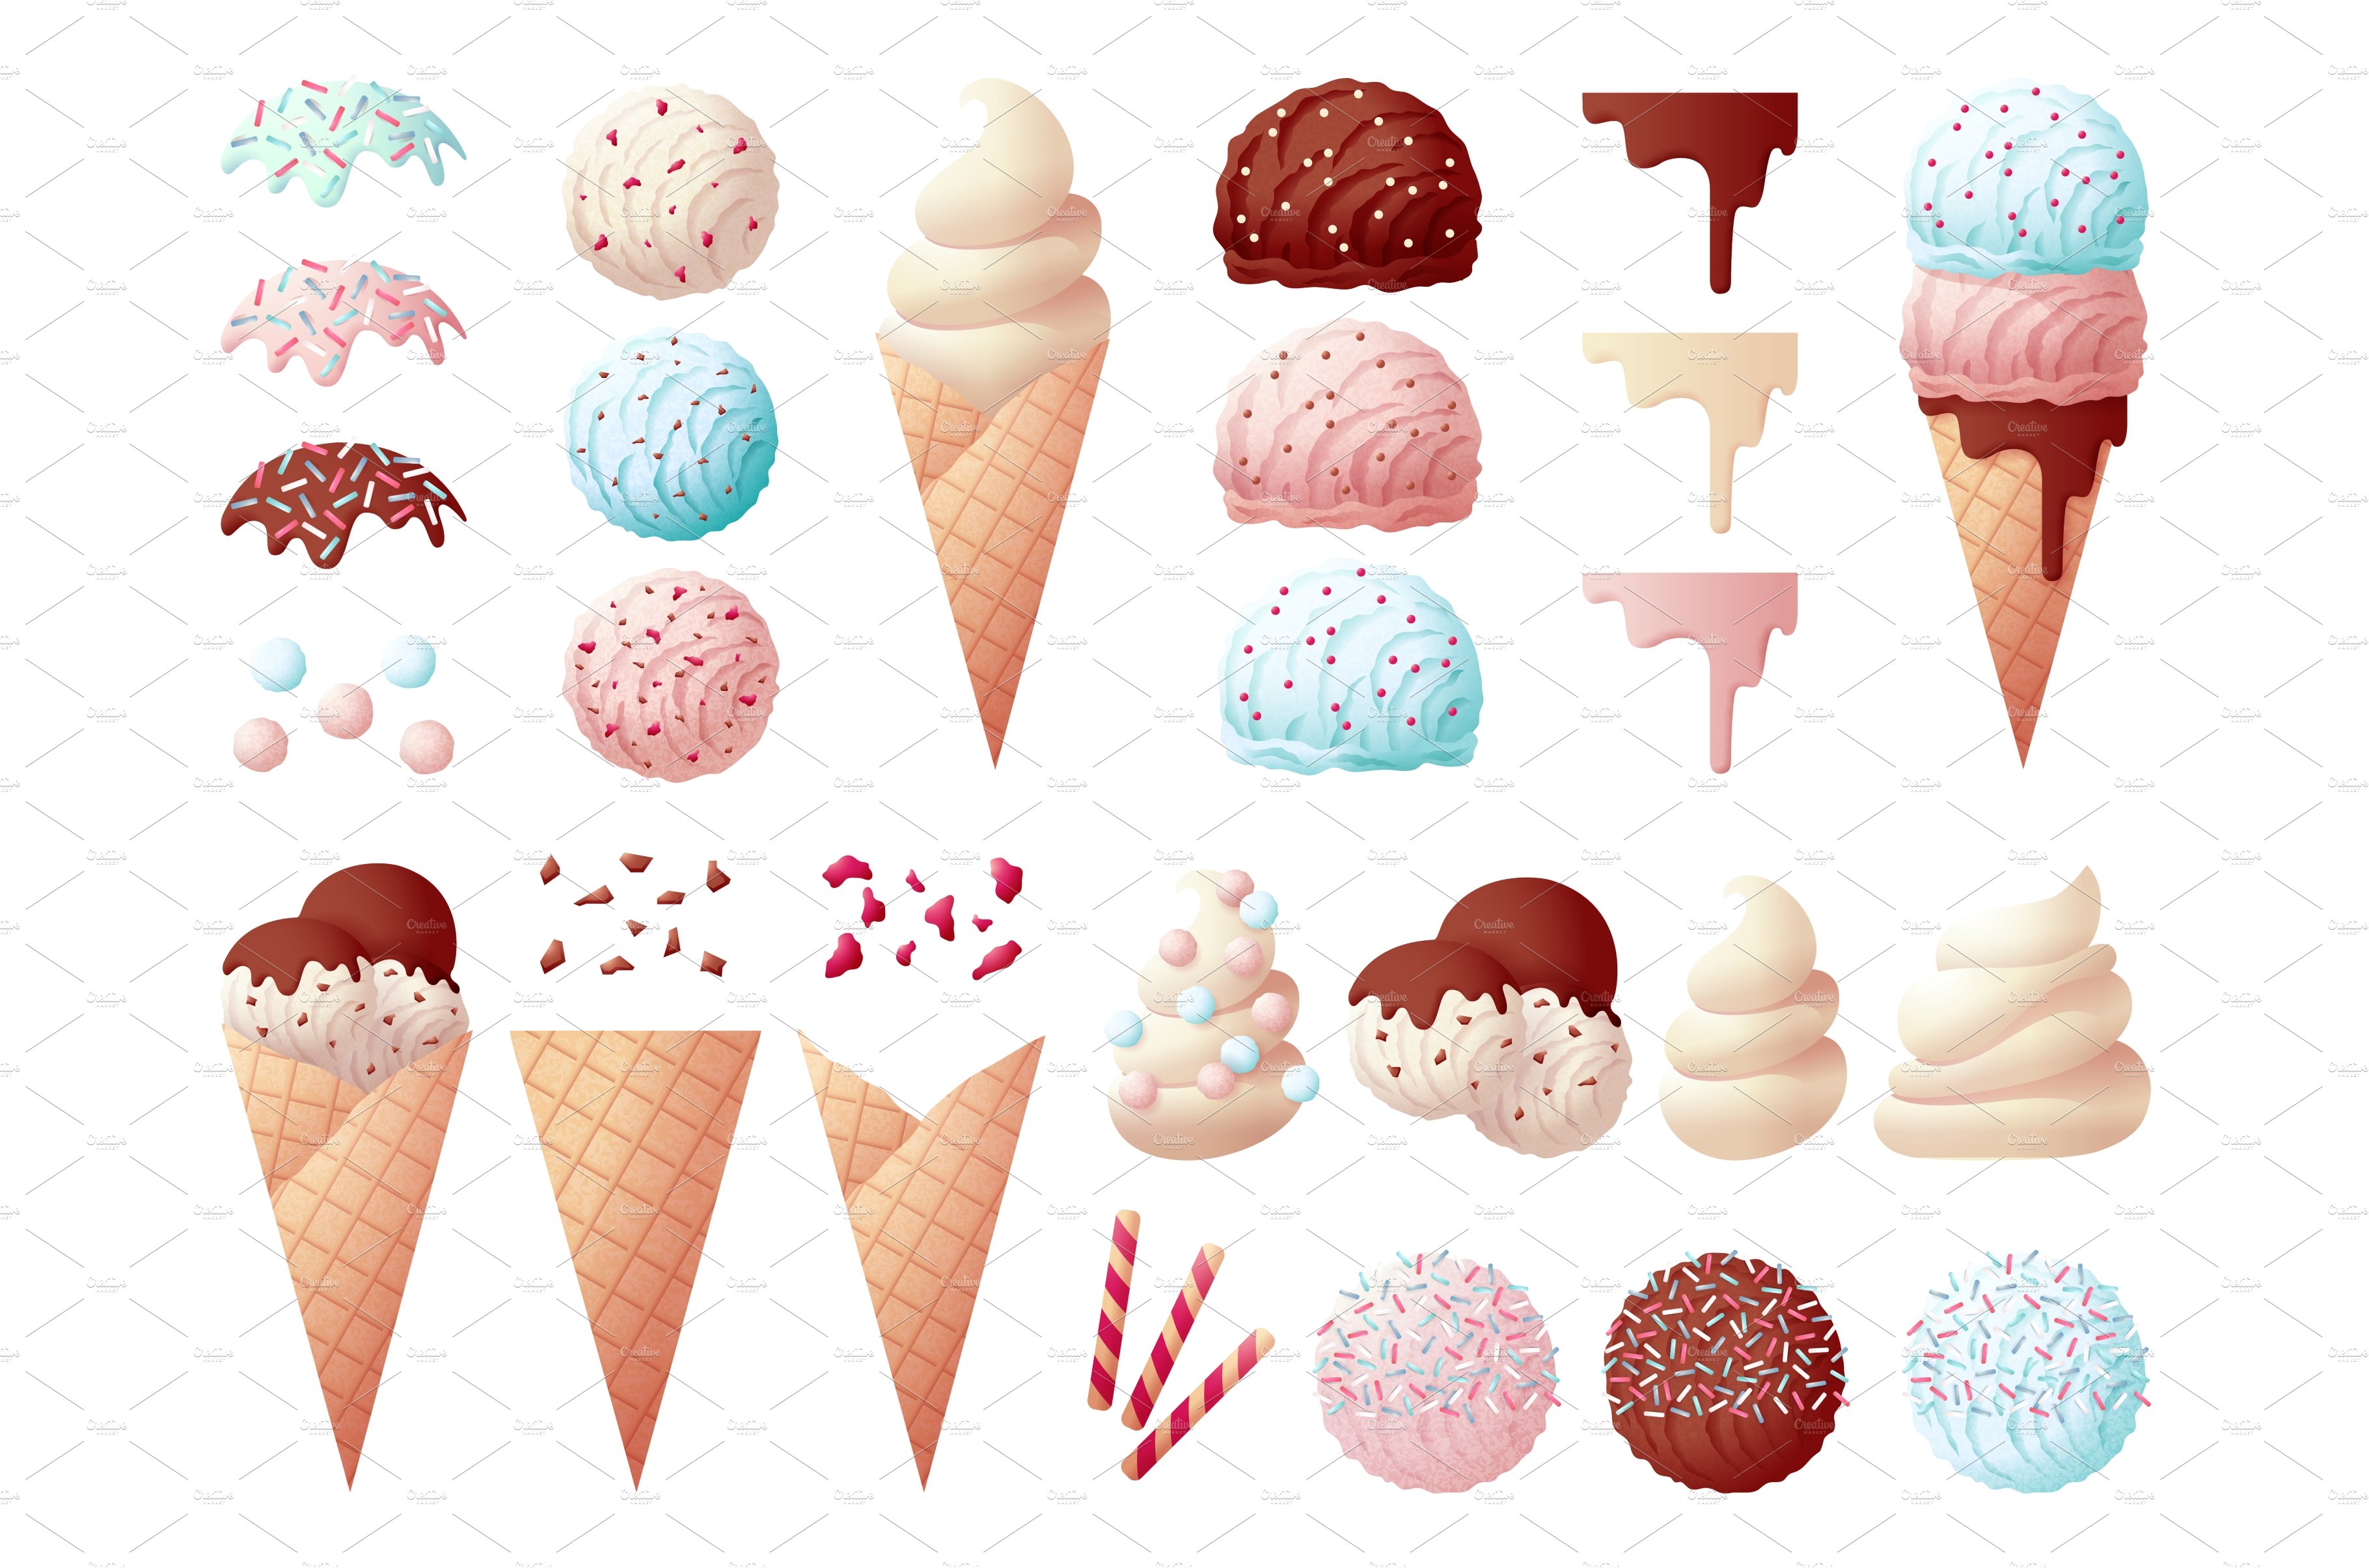 Tasty ice cream elements. Dessert cover image.